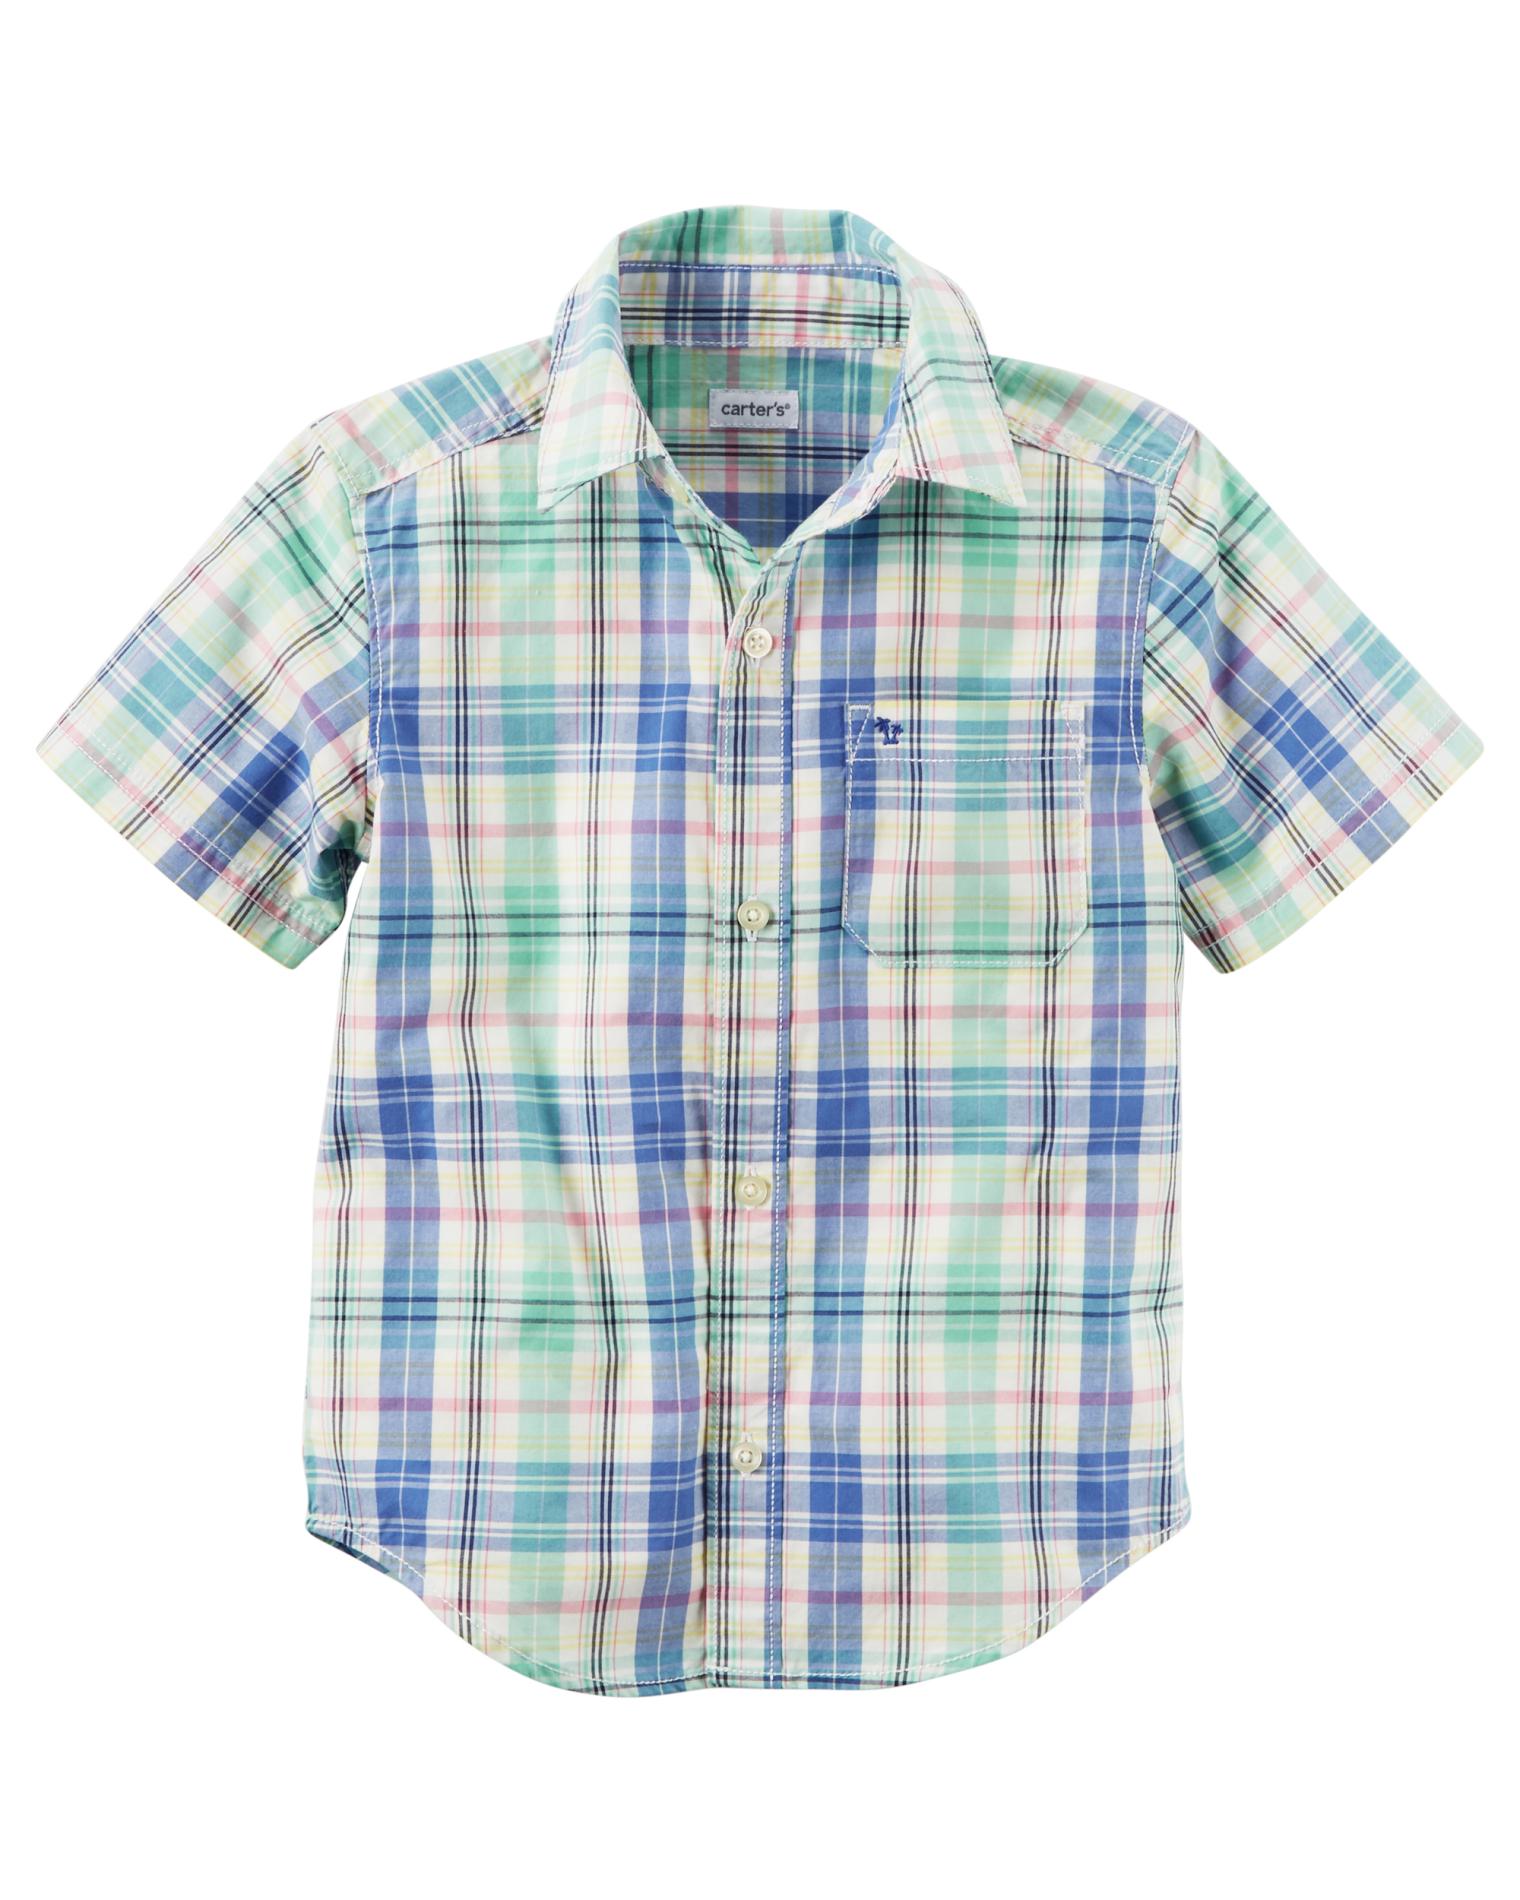 Carter's Toddler Boys' Button-Front Shirt - Plaid